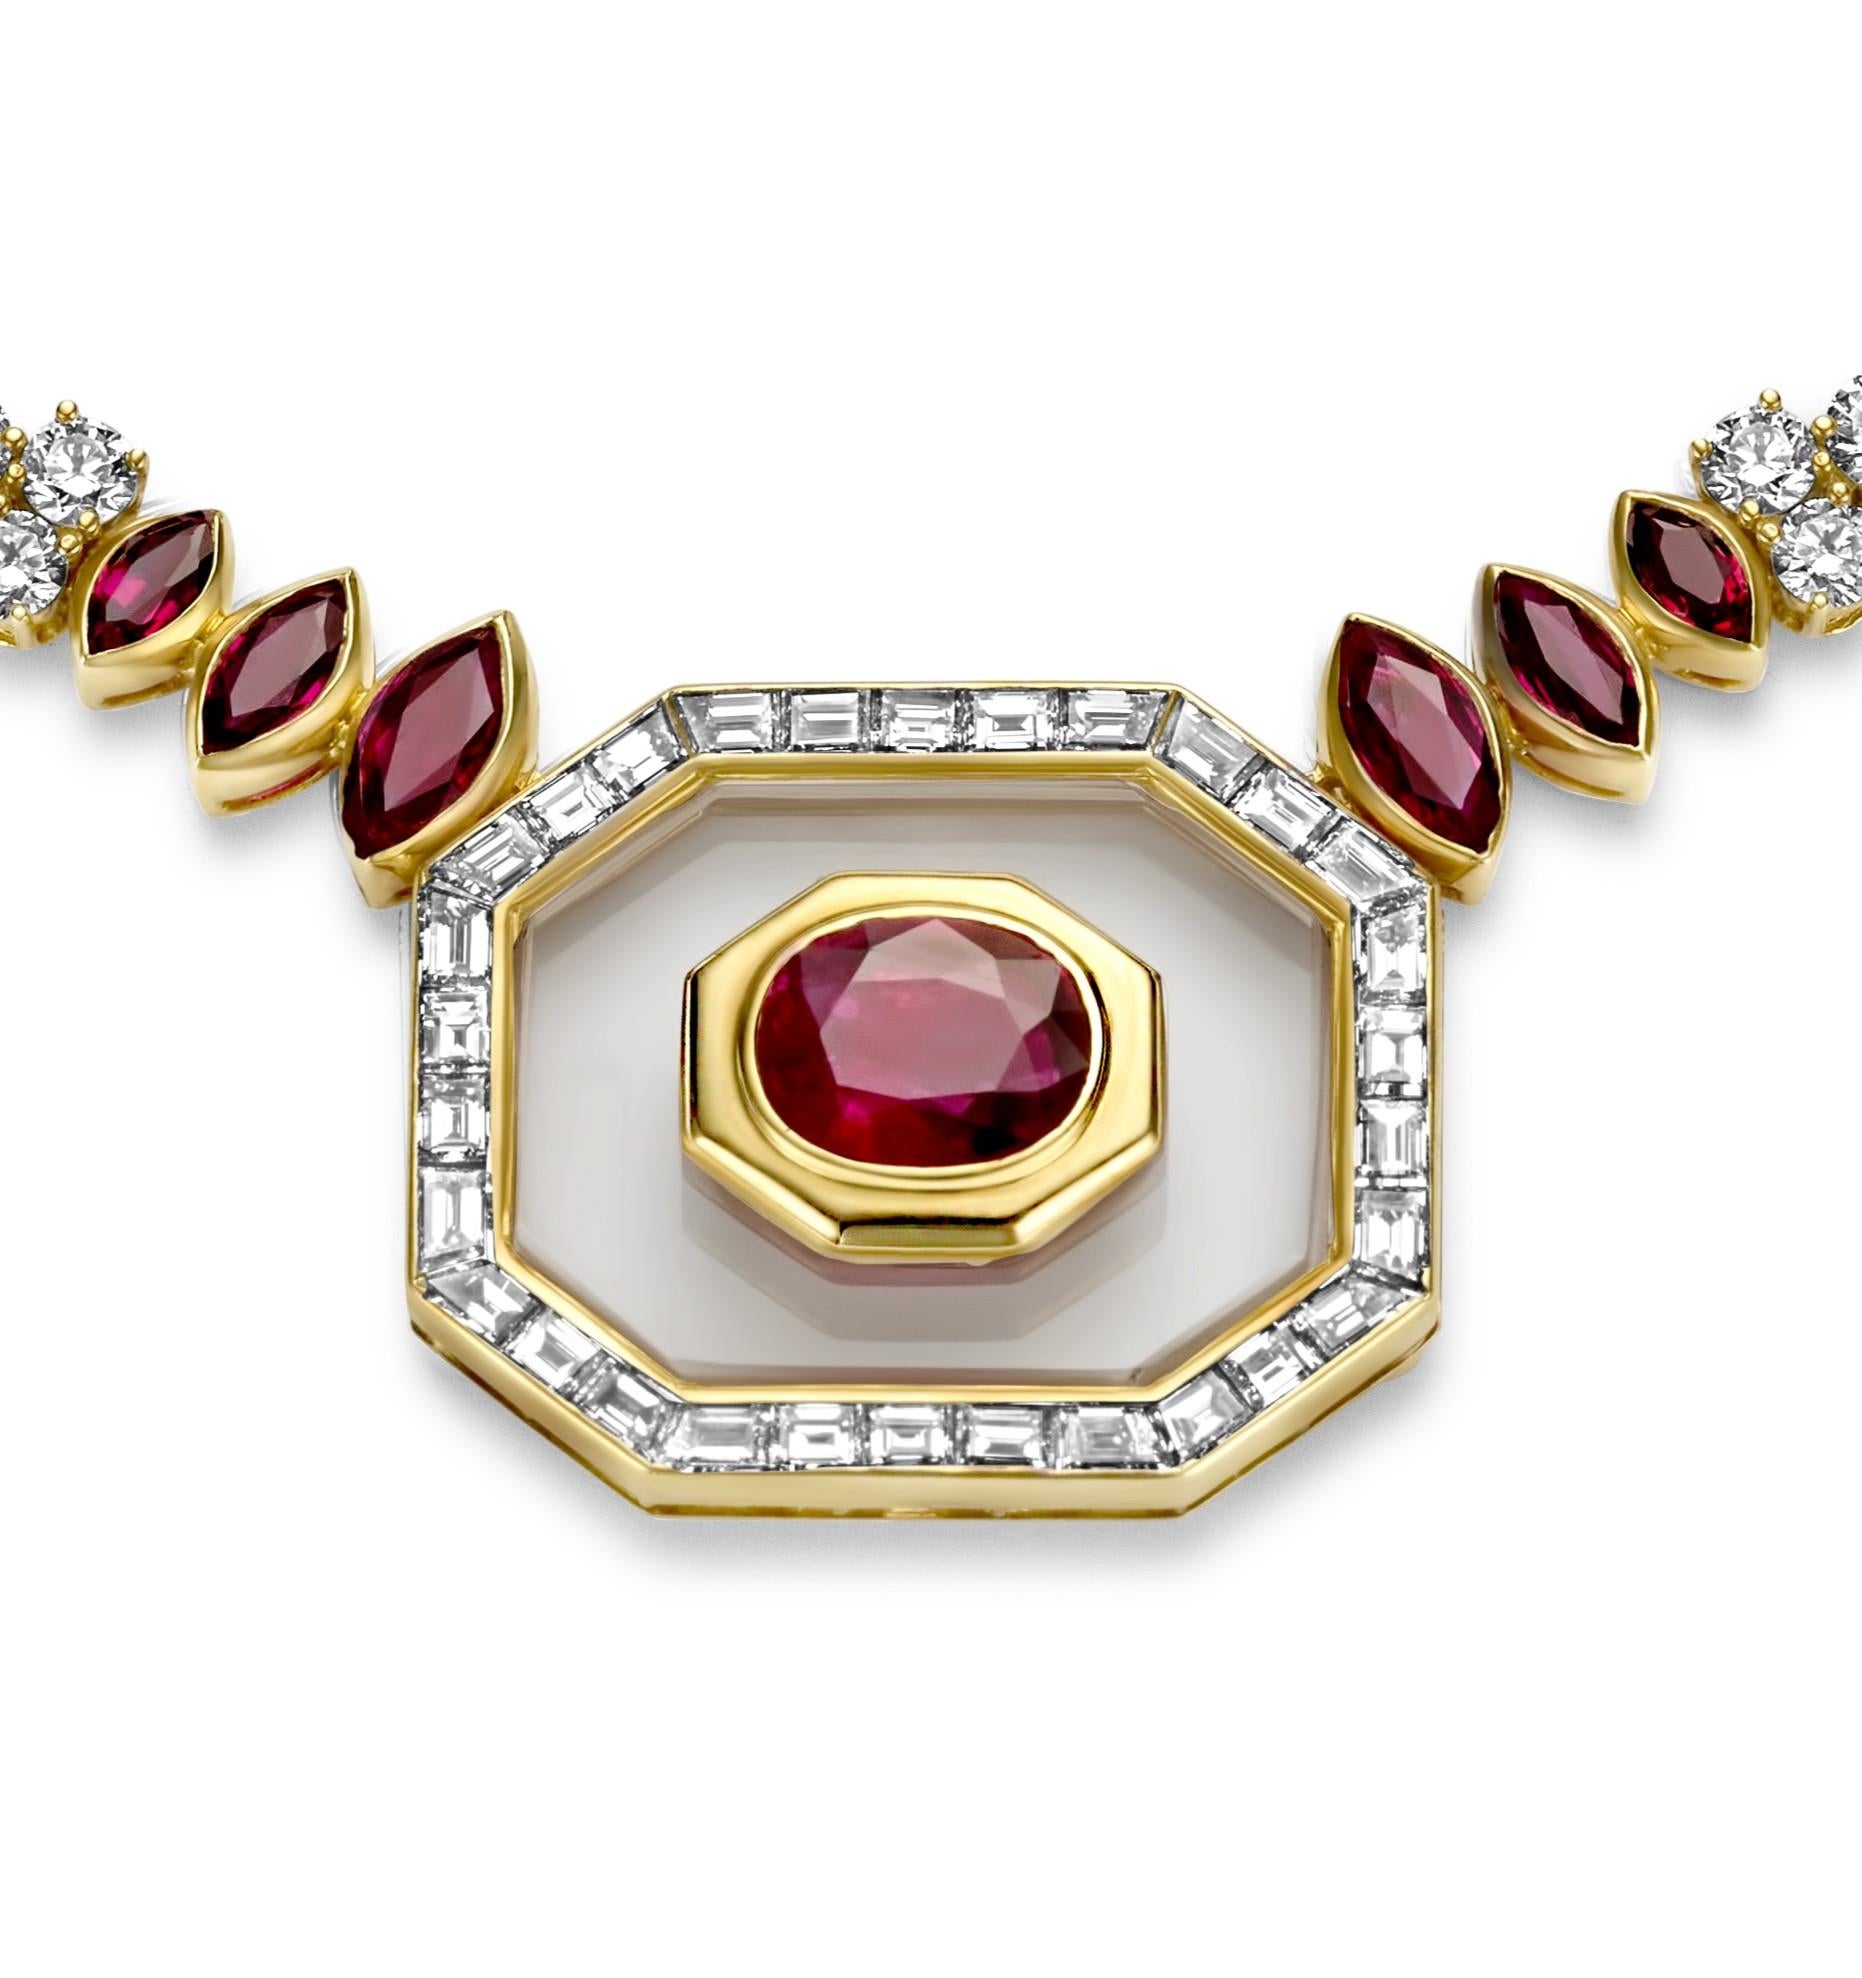 Asprey London Ruby & Diamonds Necklace, Estate Sultan of Oman Qaboos Bin Said 

Diamonds: Brilliant cut diamonds, together approx. 9.75 ct. diamonds

Baguette cut diamonds together approx. 1.45 ct. 

Centre Ruby stone: Natural oval shape, red